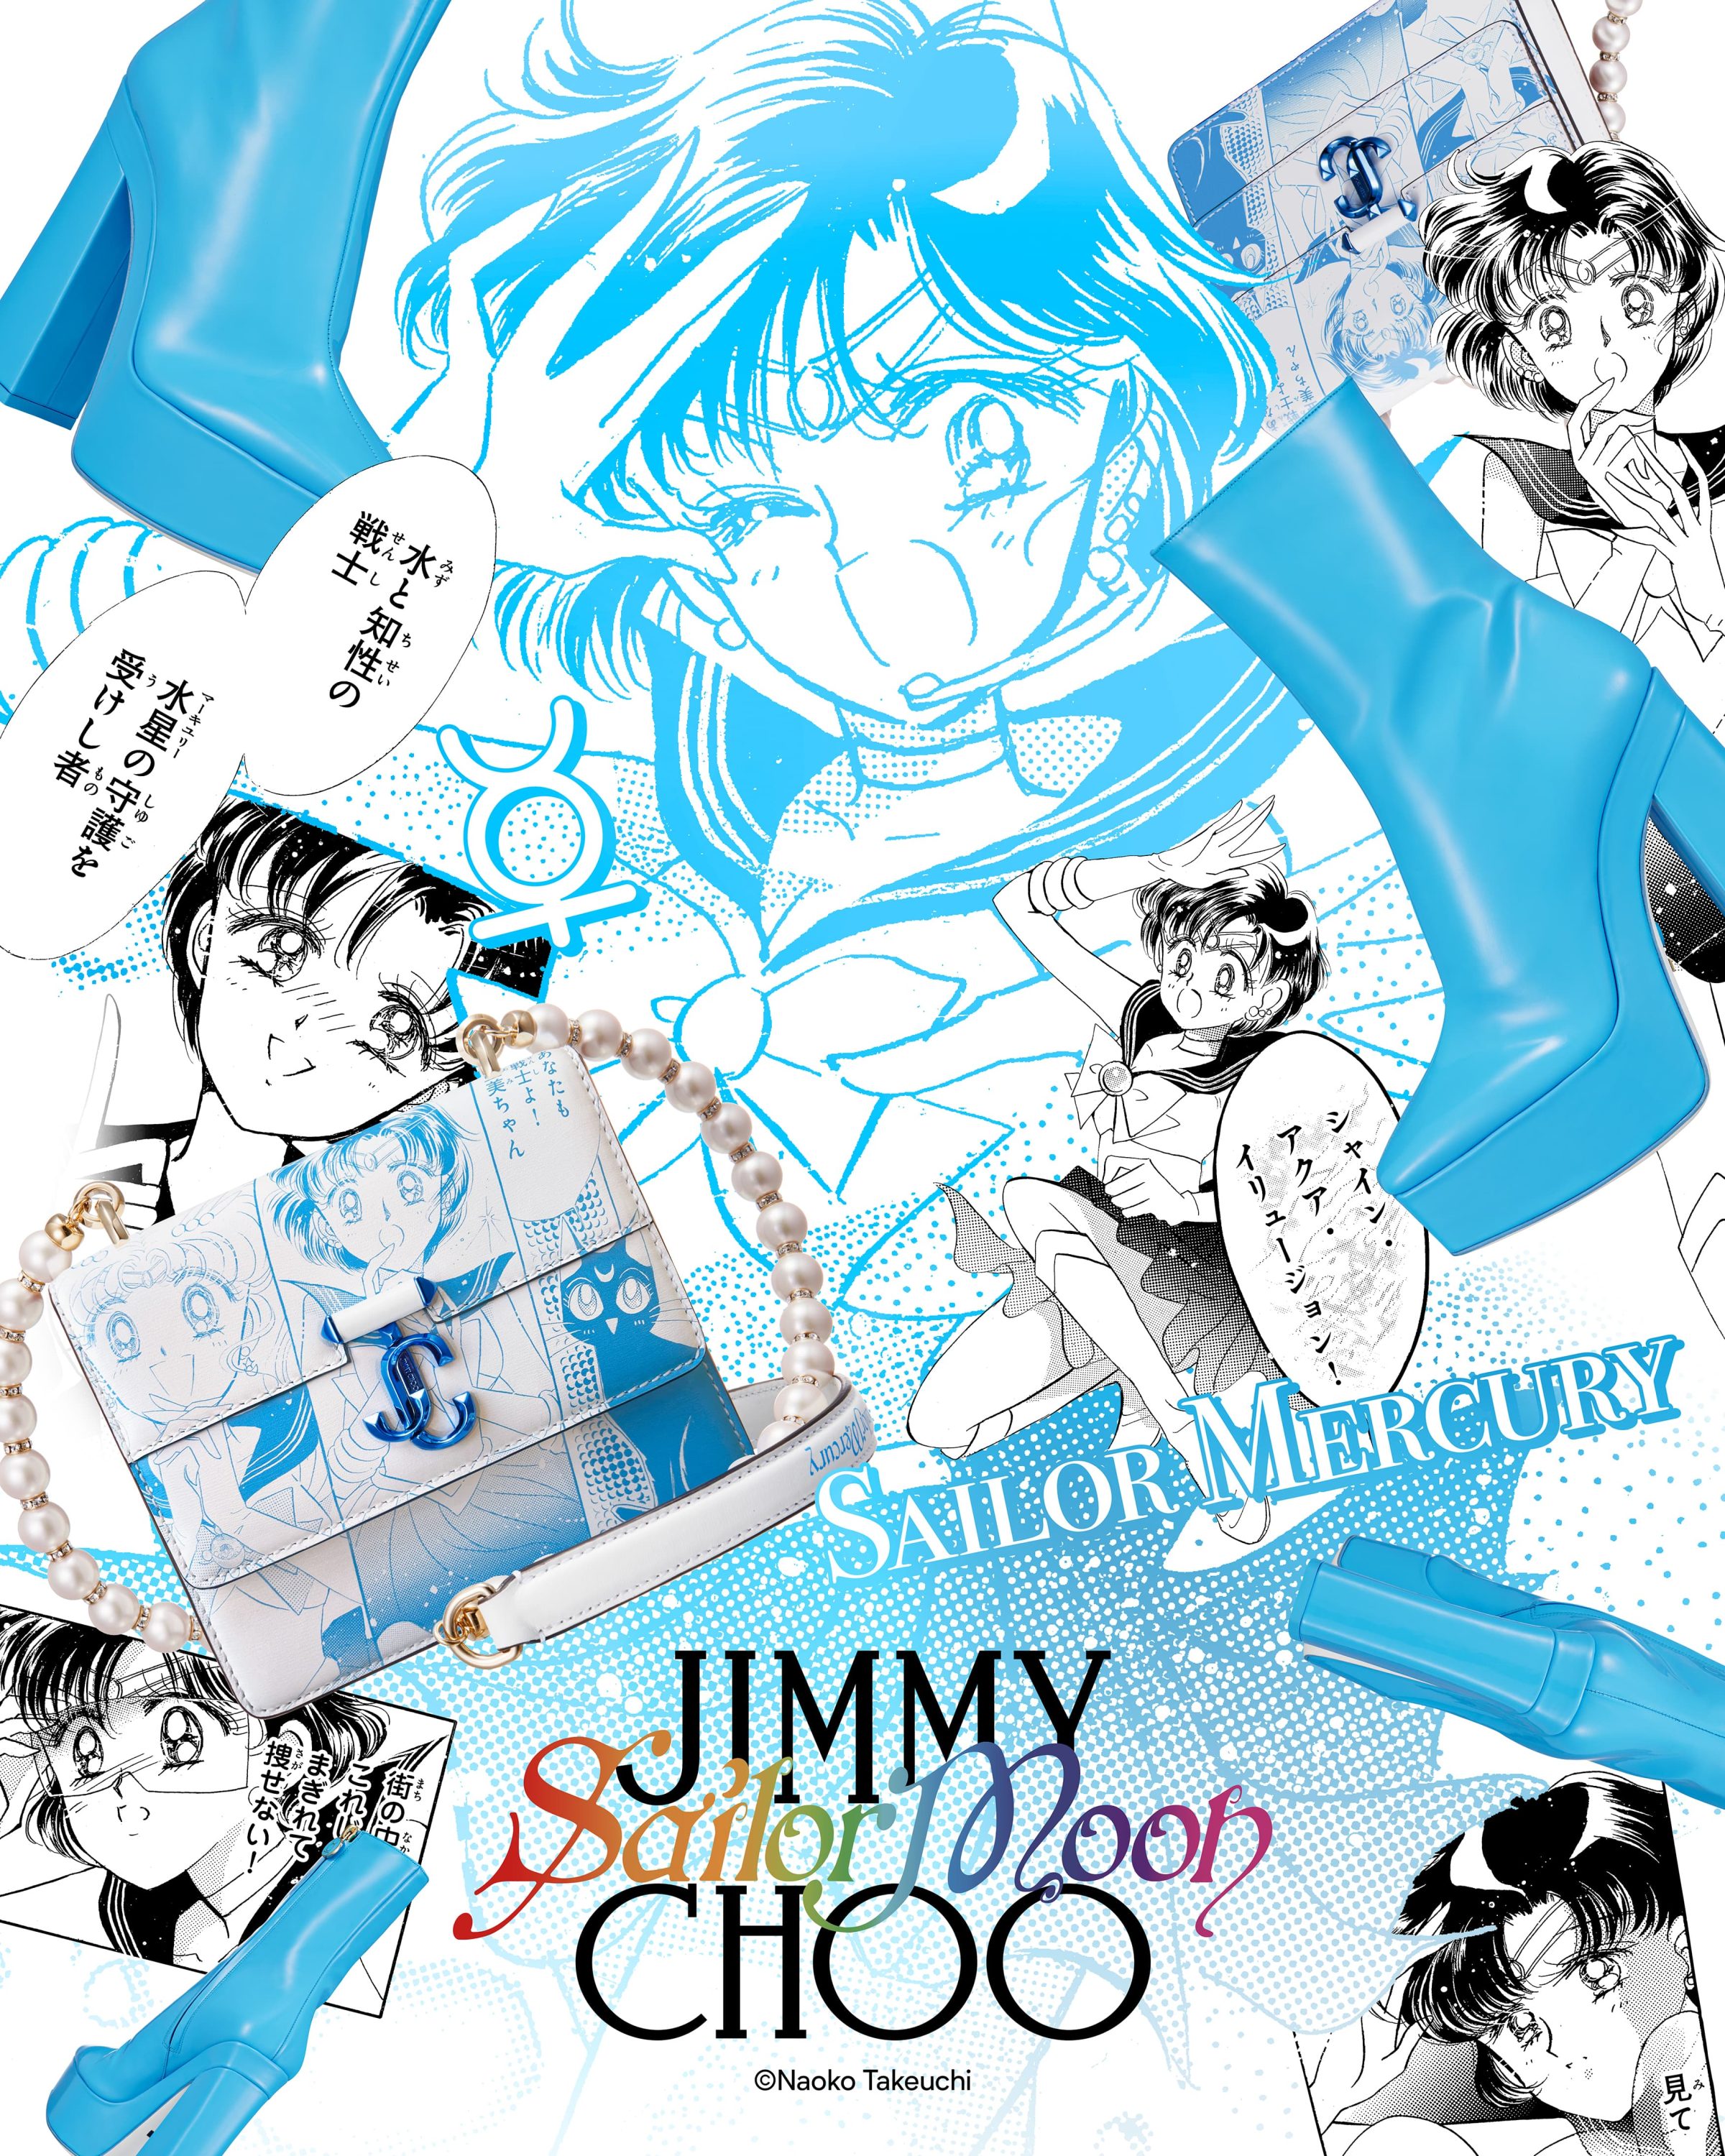 Jimmy Choo x Pretty Guardian Sailor Moon Capsule Collection - Tom + Lorenzo